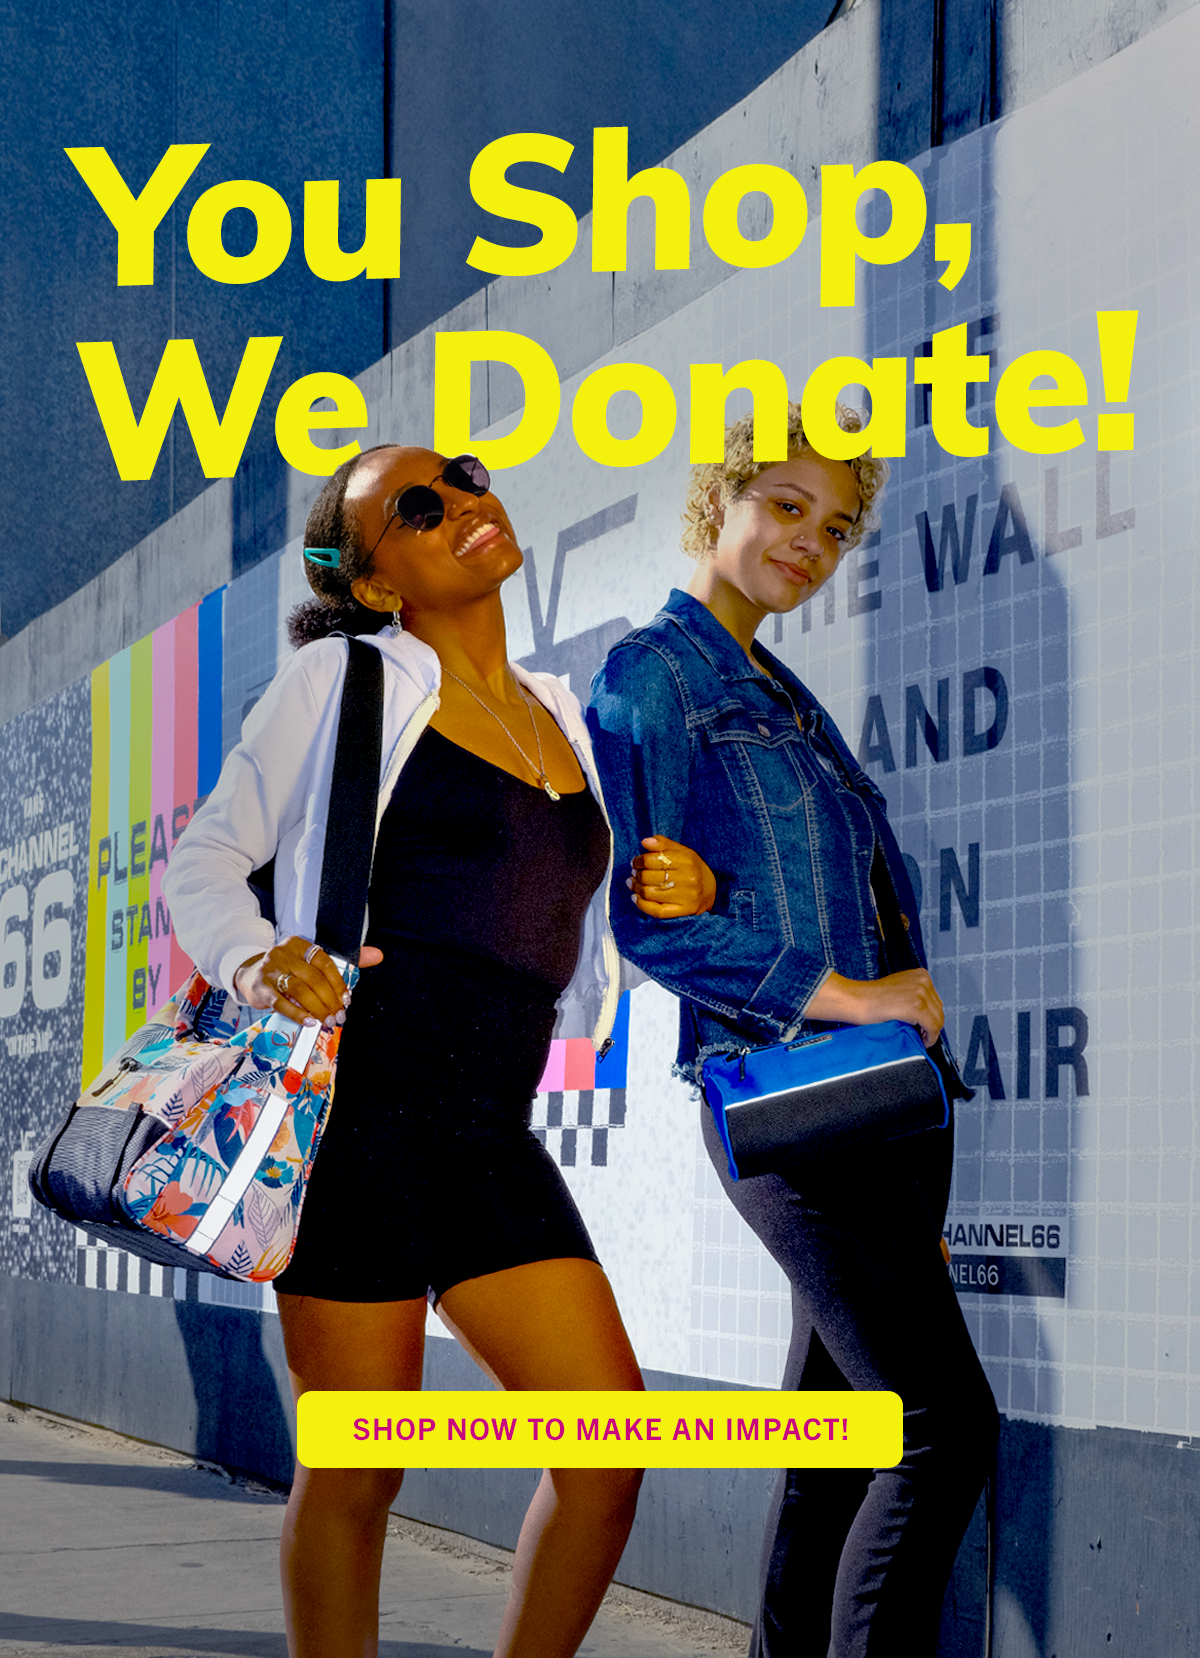 You shop, we donate! Shop now to make an impact!